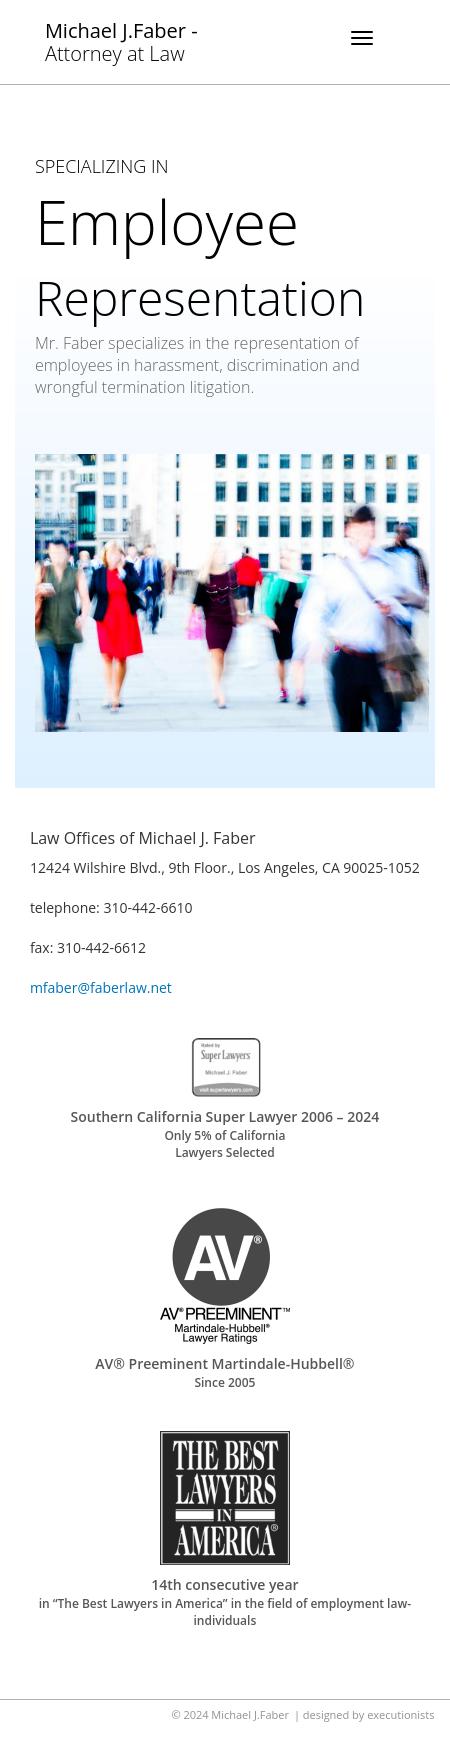 Michael J. Faber - Los Angeles CA Lawyers